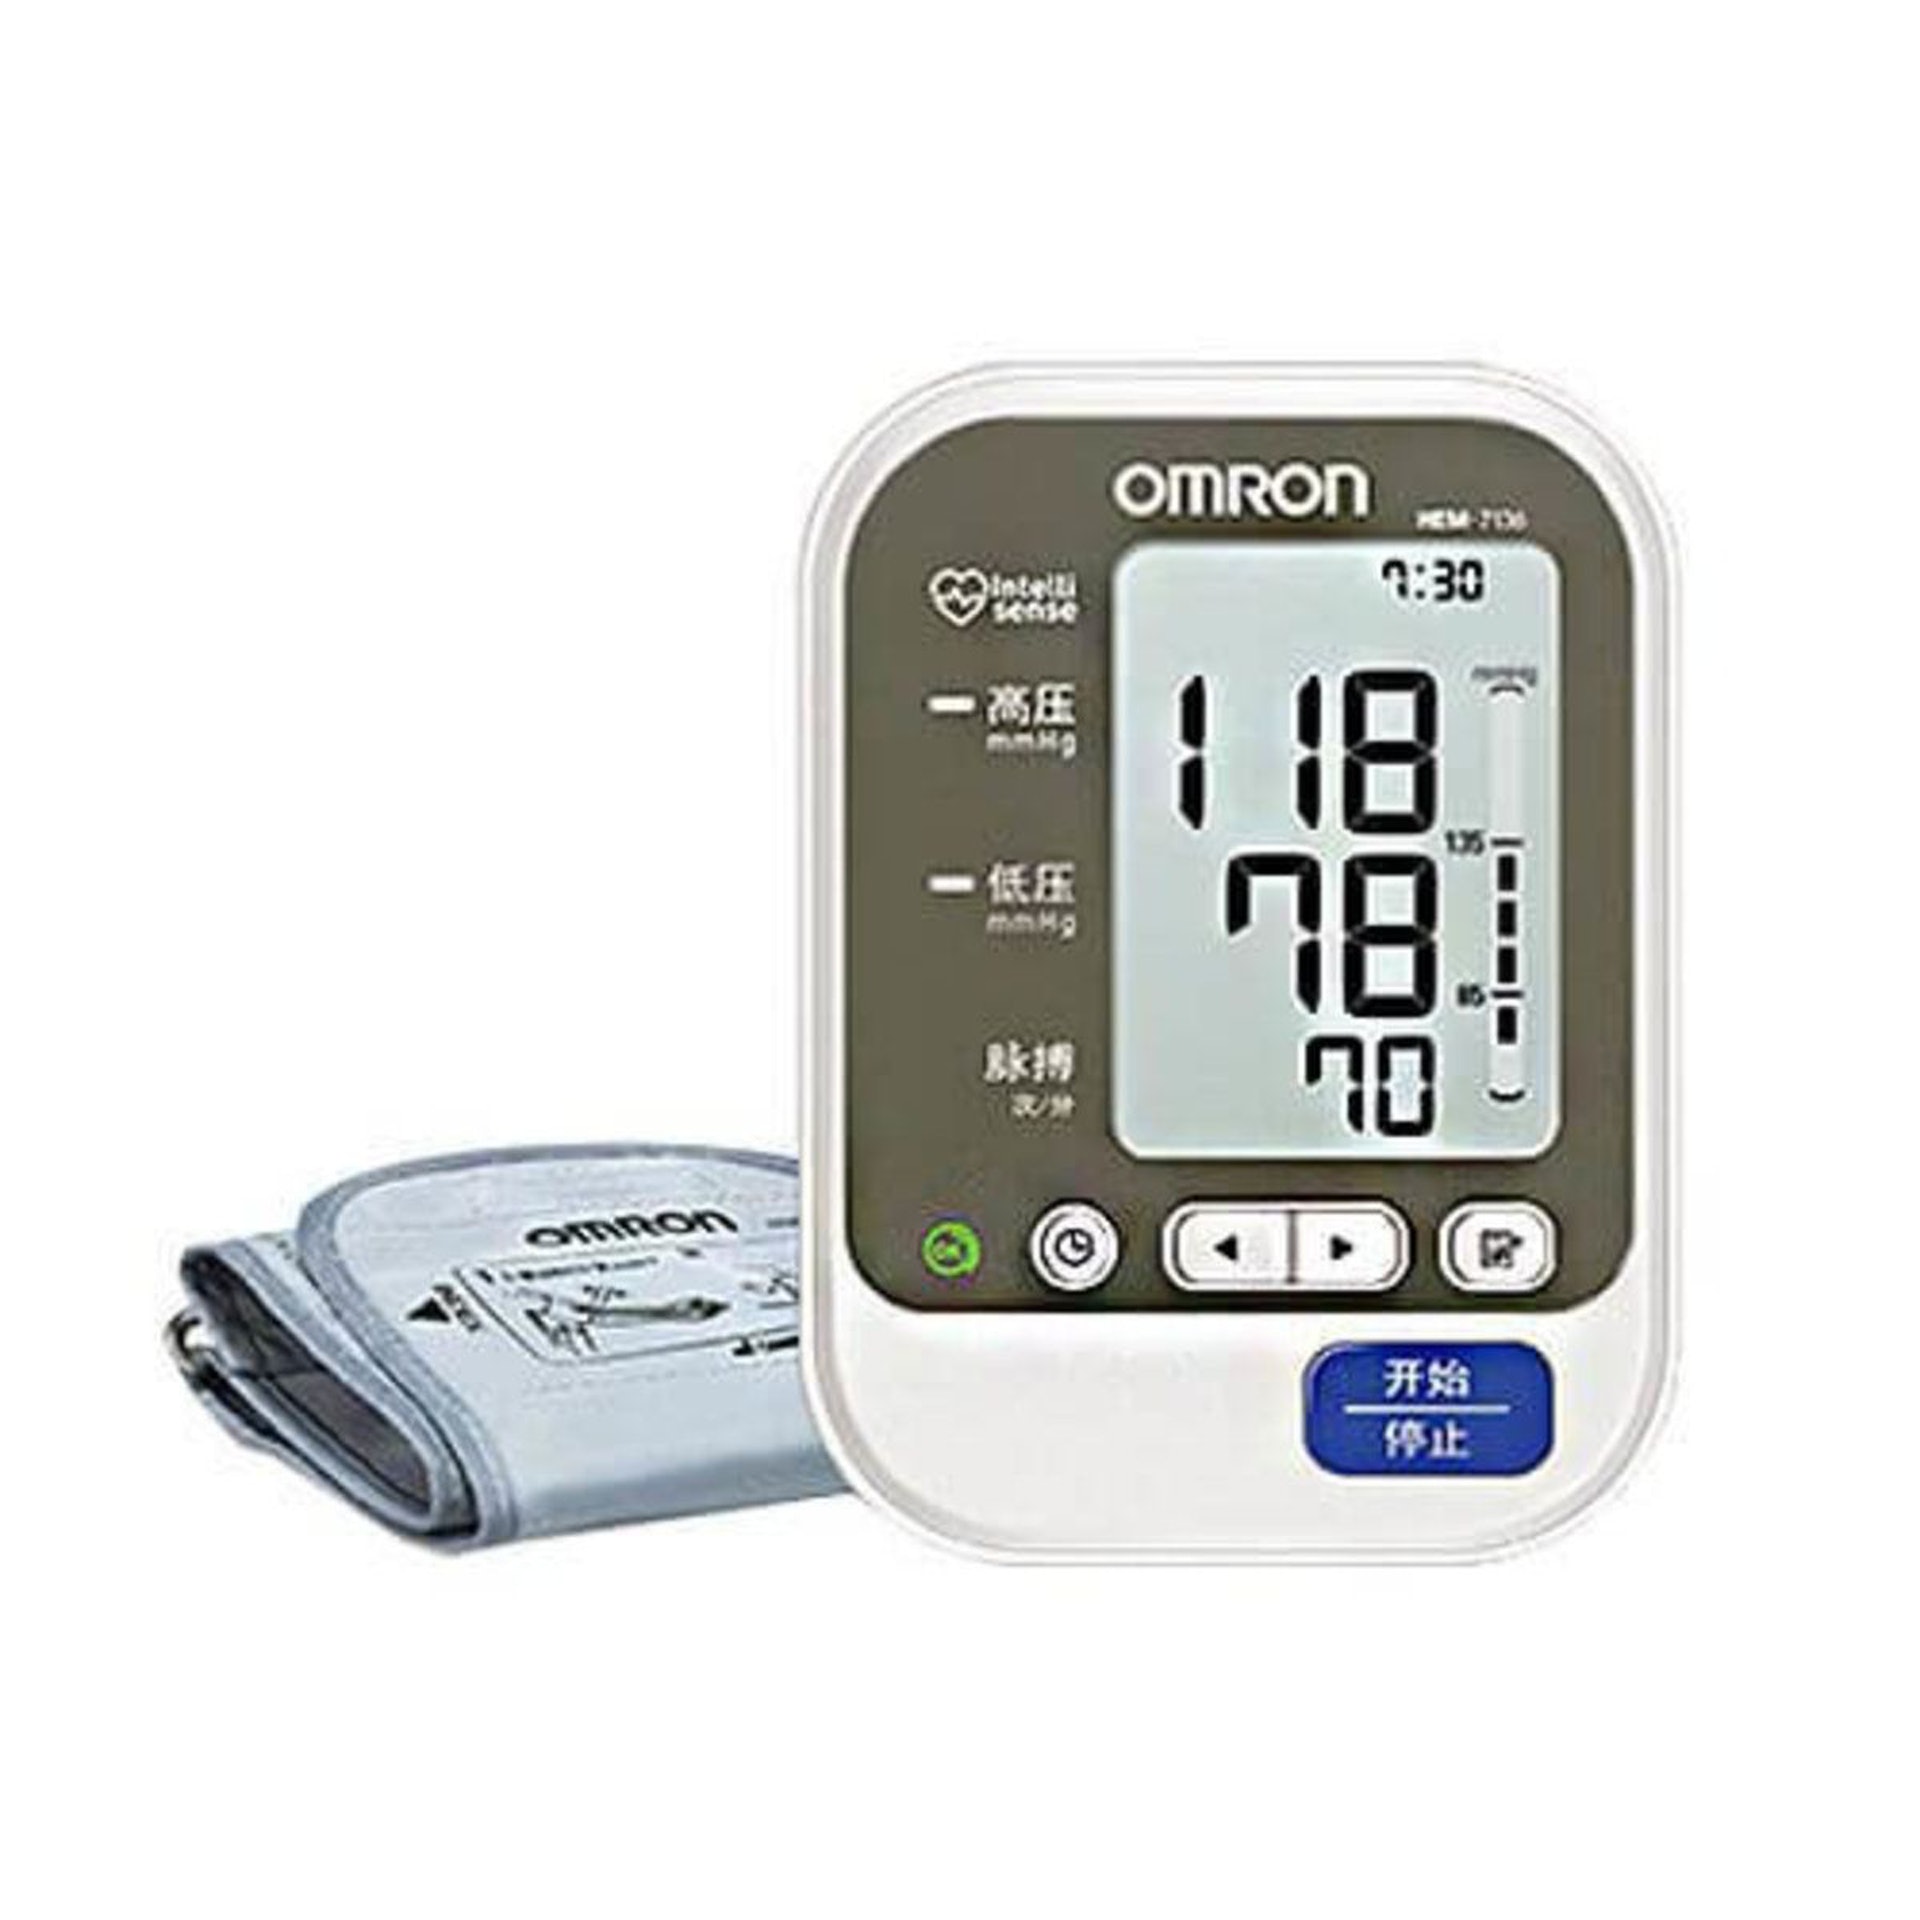 OMRON手臂式電子血壓計 $598，最多可用01積分29,900分抵消 $299 現金。